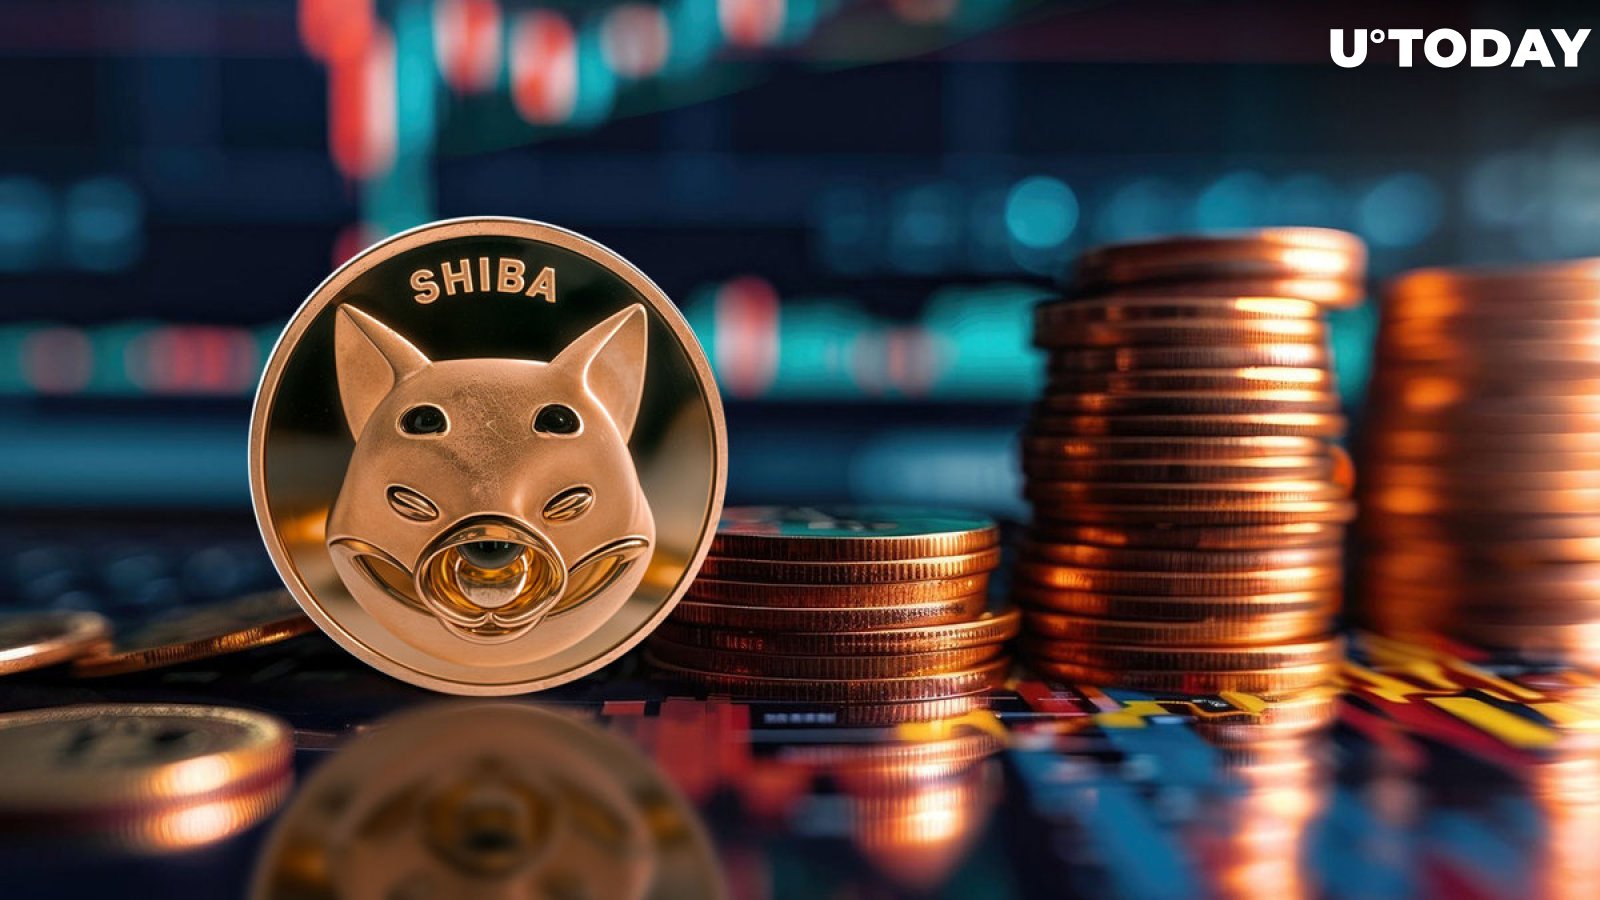 8 Billion Shiba Inu (SHIB) in 24 Hours: What's Happening?